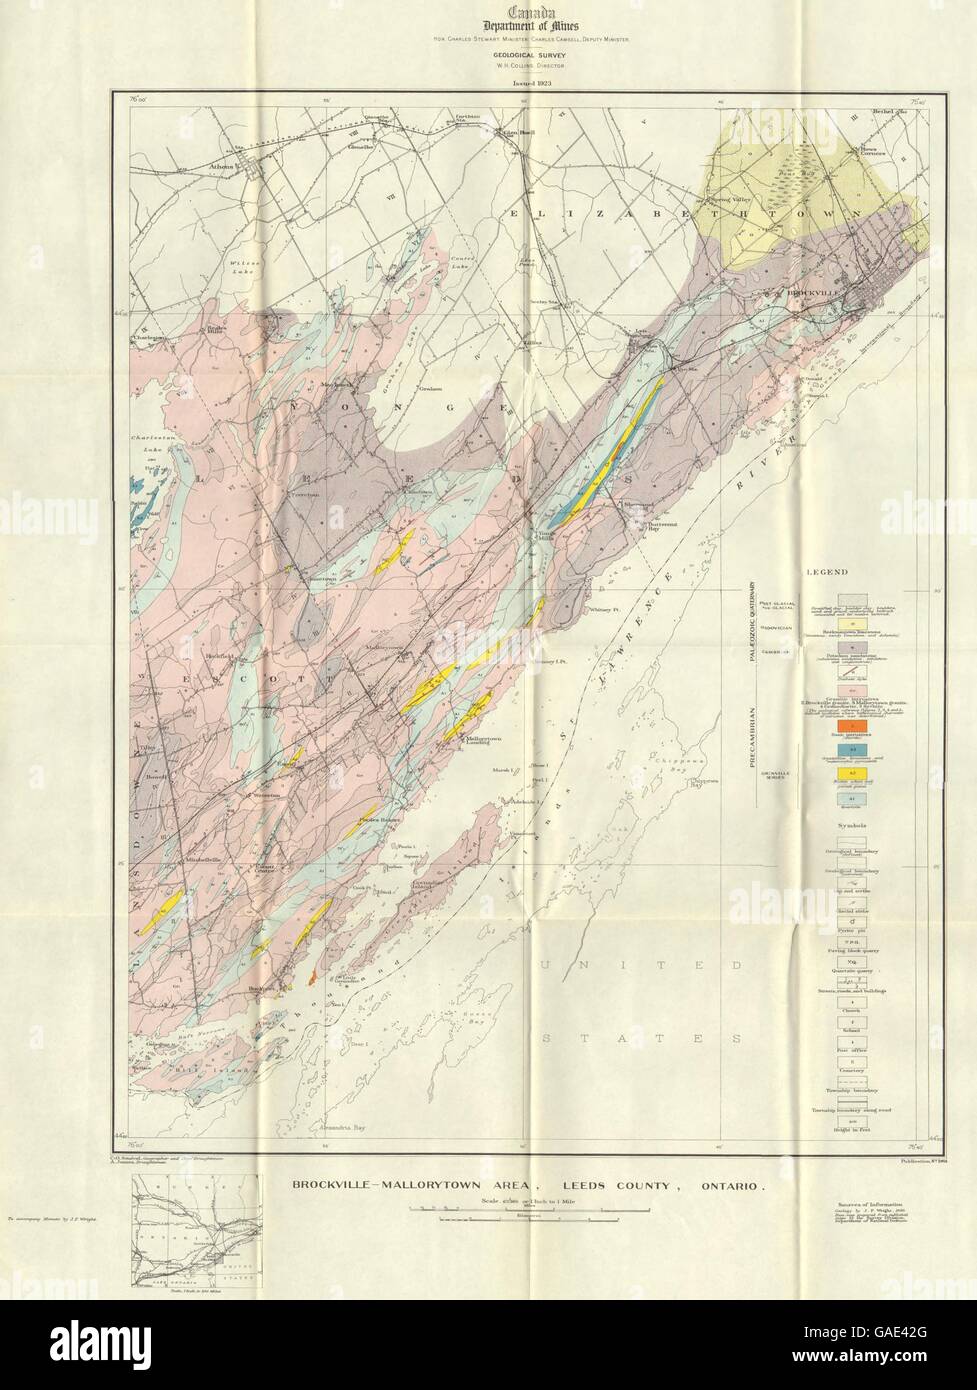 CANADA: Brockville-Mallorytown area, Leeds county, Ontario. Geology, 1923 map Stock Photo